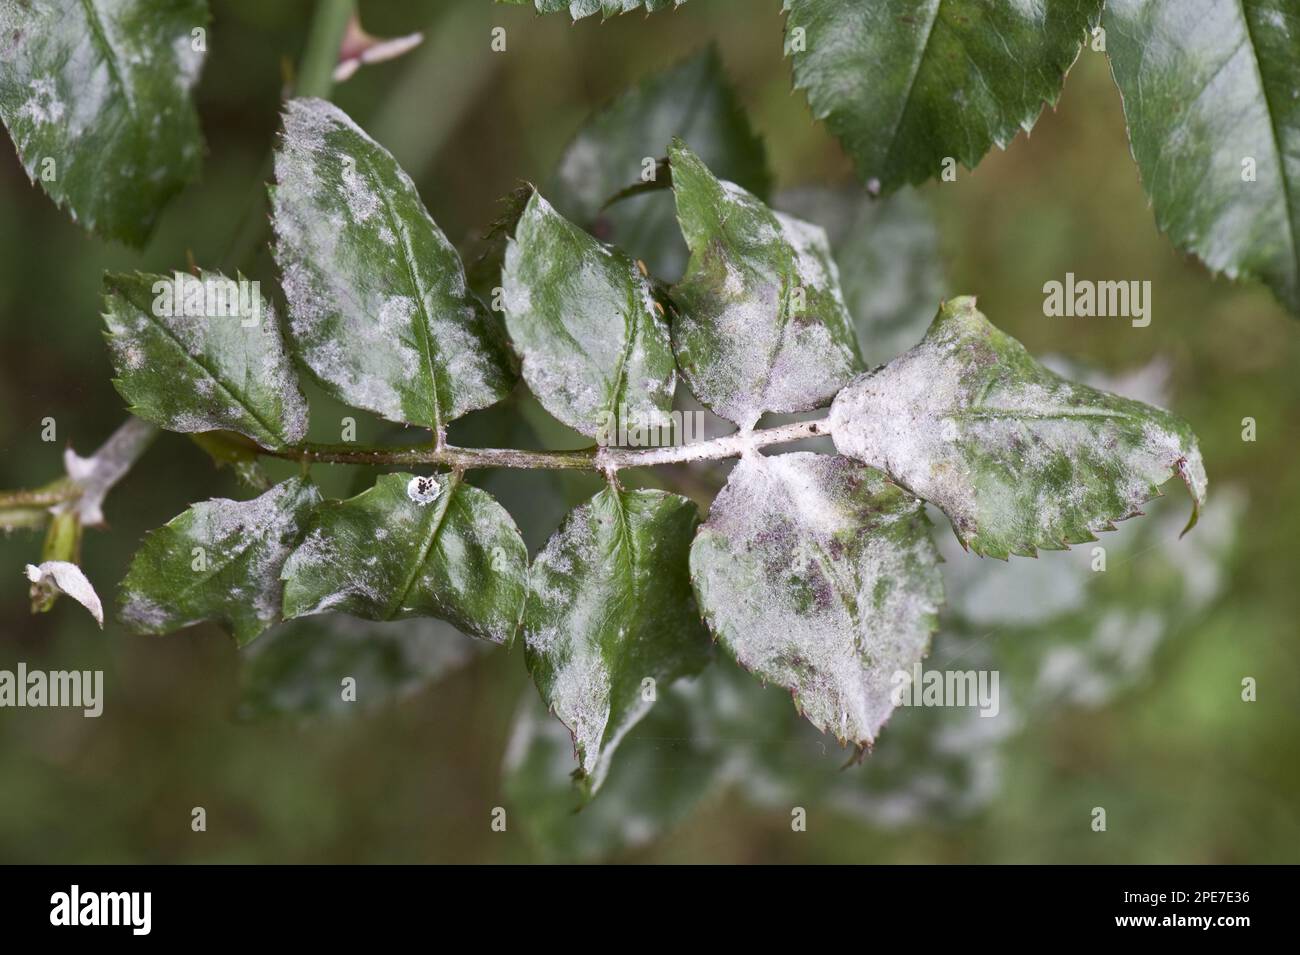 Powdery mildew, Podosphaera pannosa, on rose leaves, fungi Stock Photo